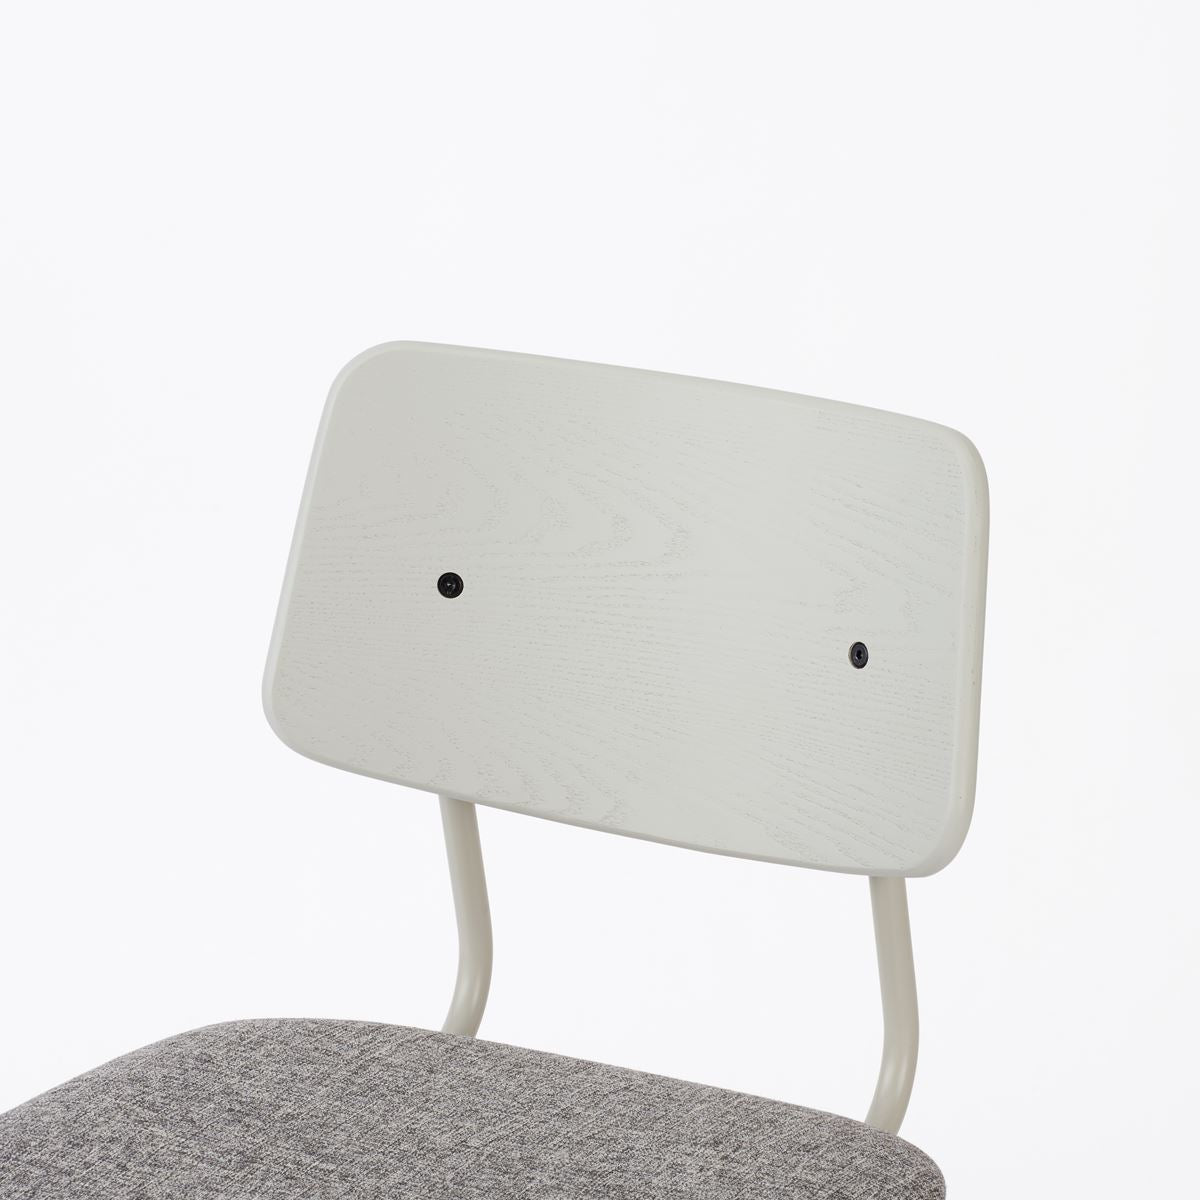 KUUM  Chair shikaku - Gray White Steel Frame/Cushion/Gray White Back / クーム チェア シカク